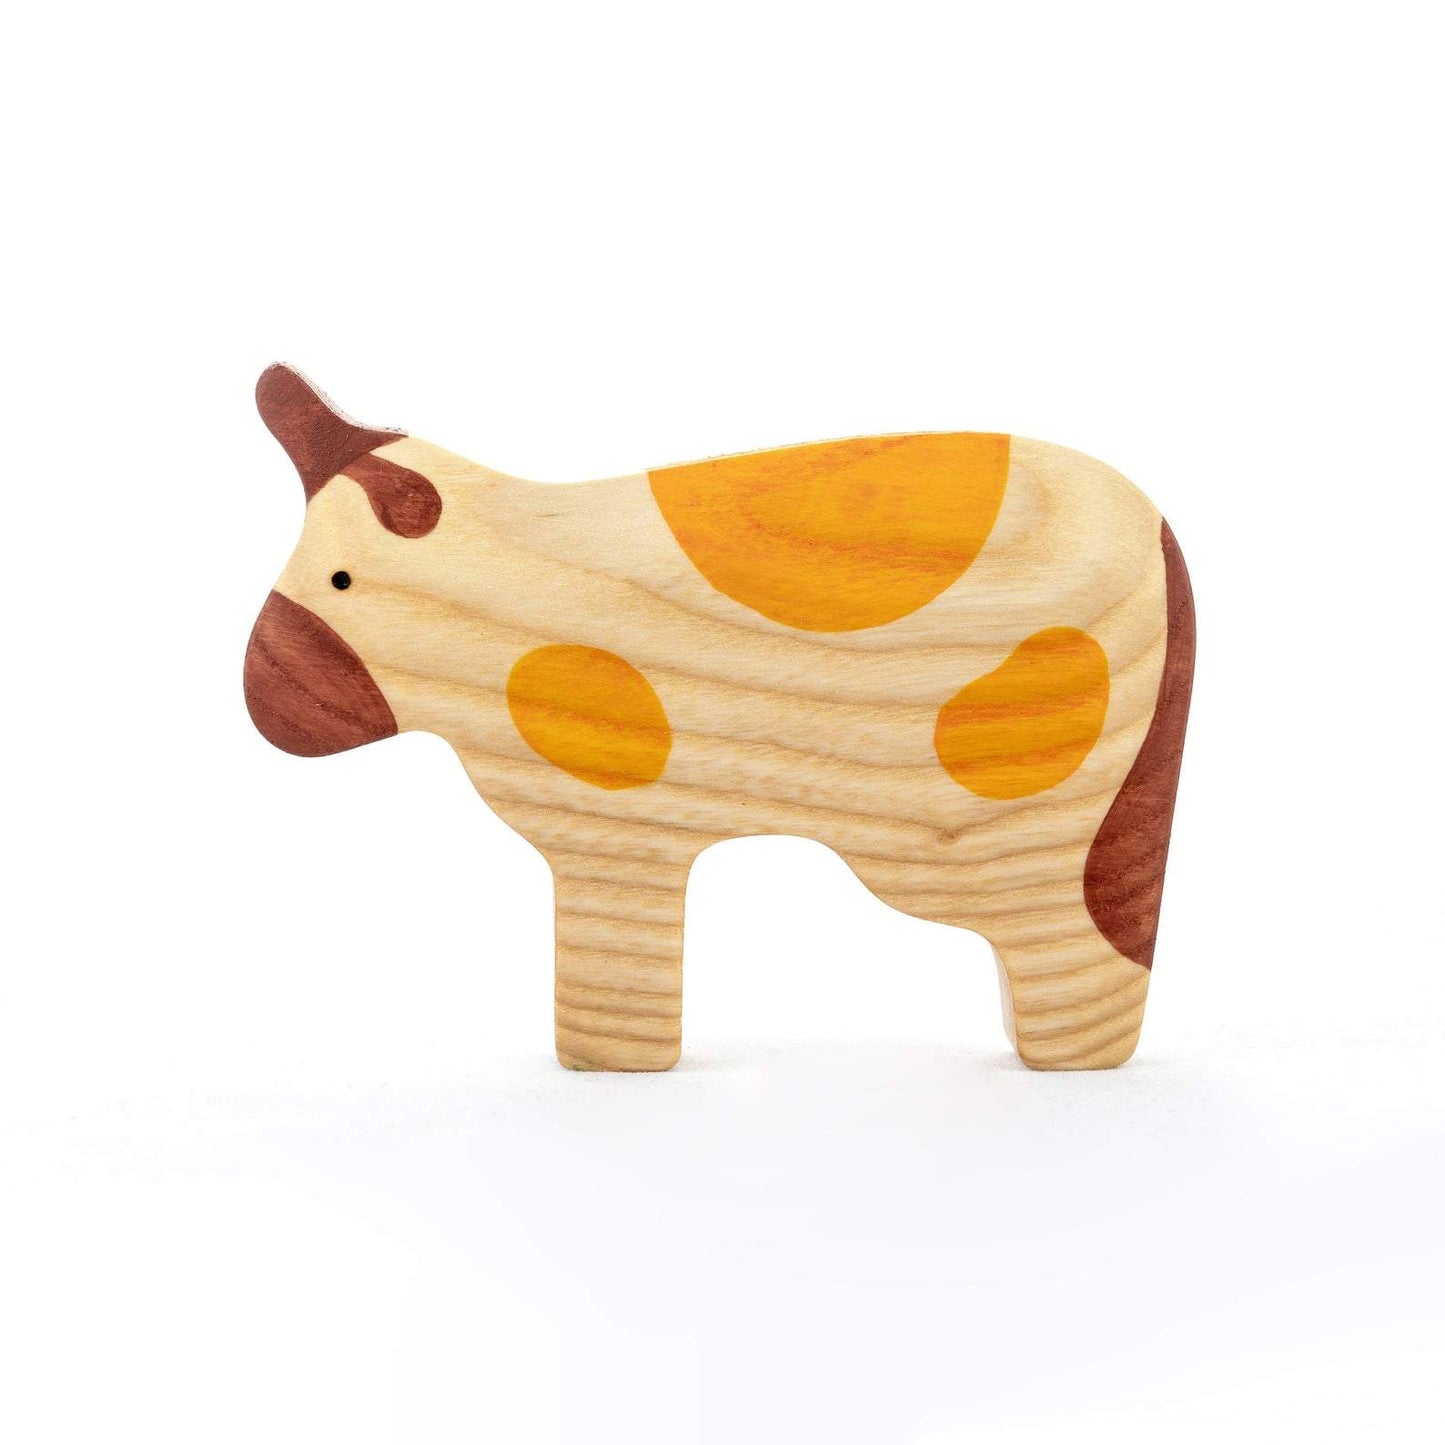 Farm Animals Toy Set - WERONE